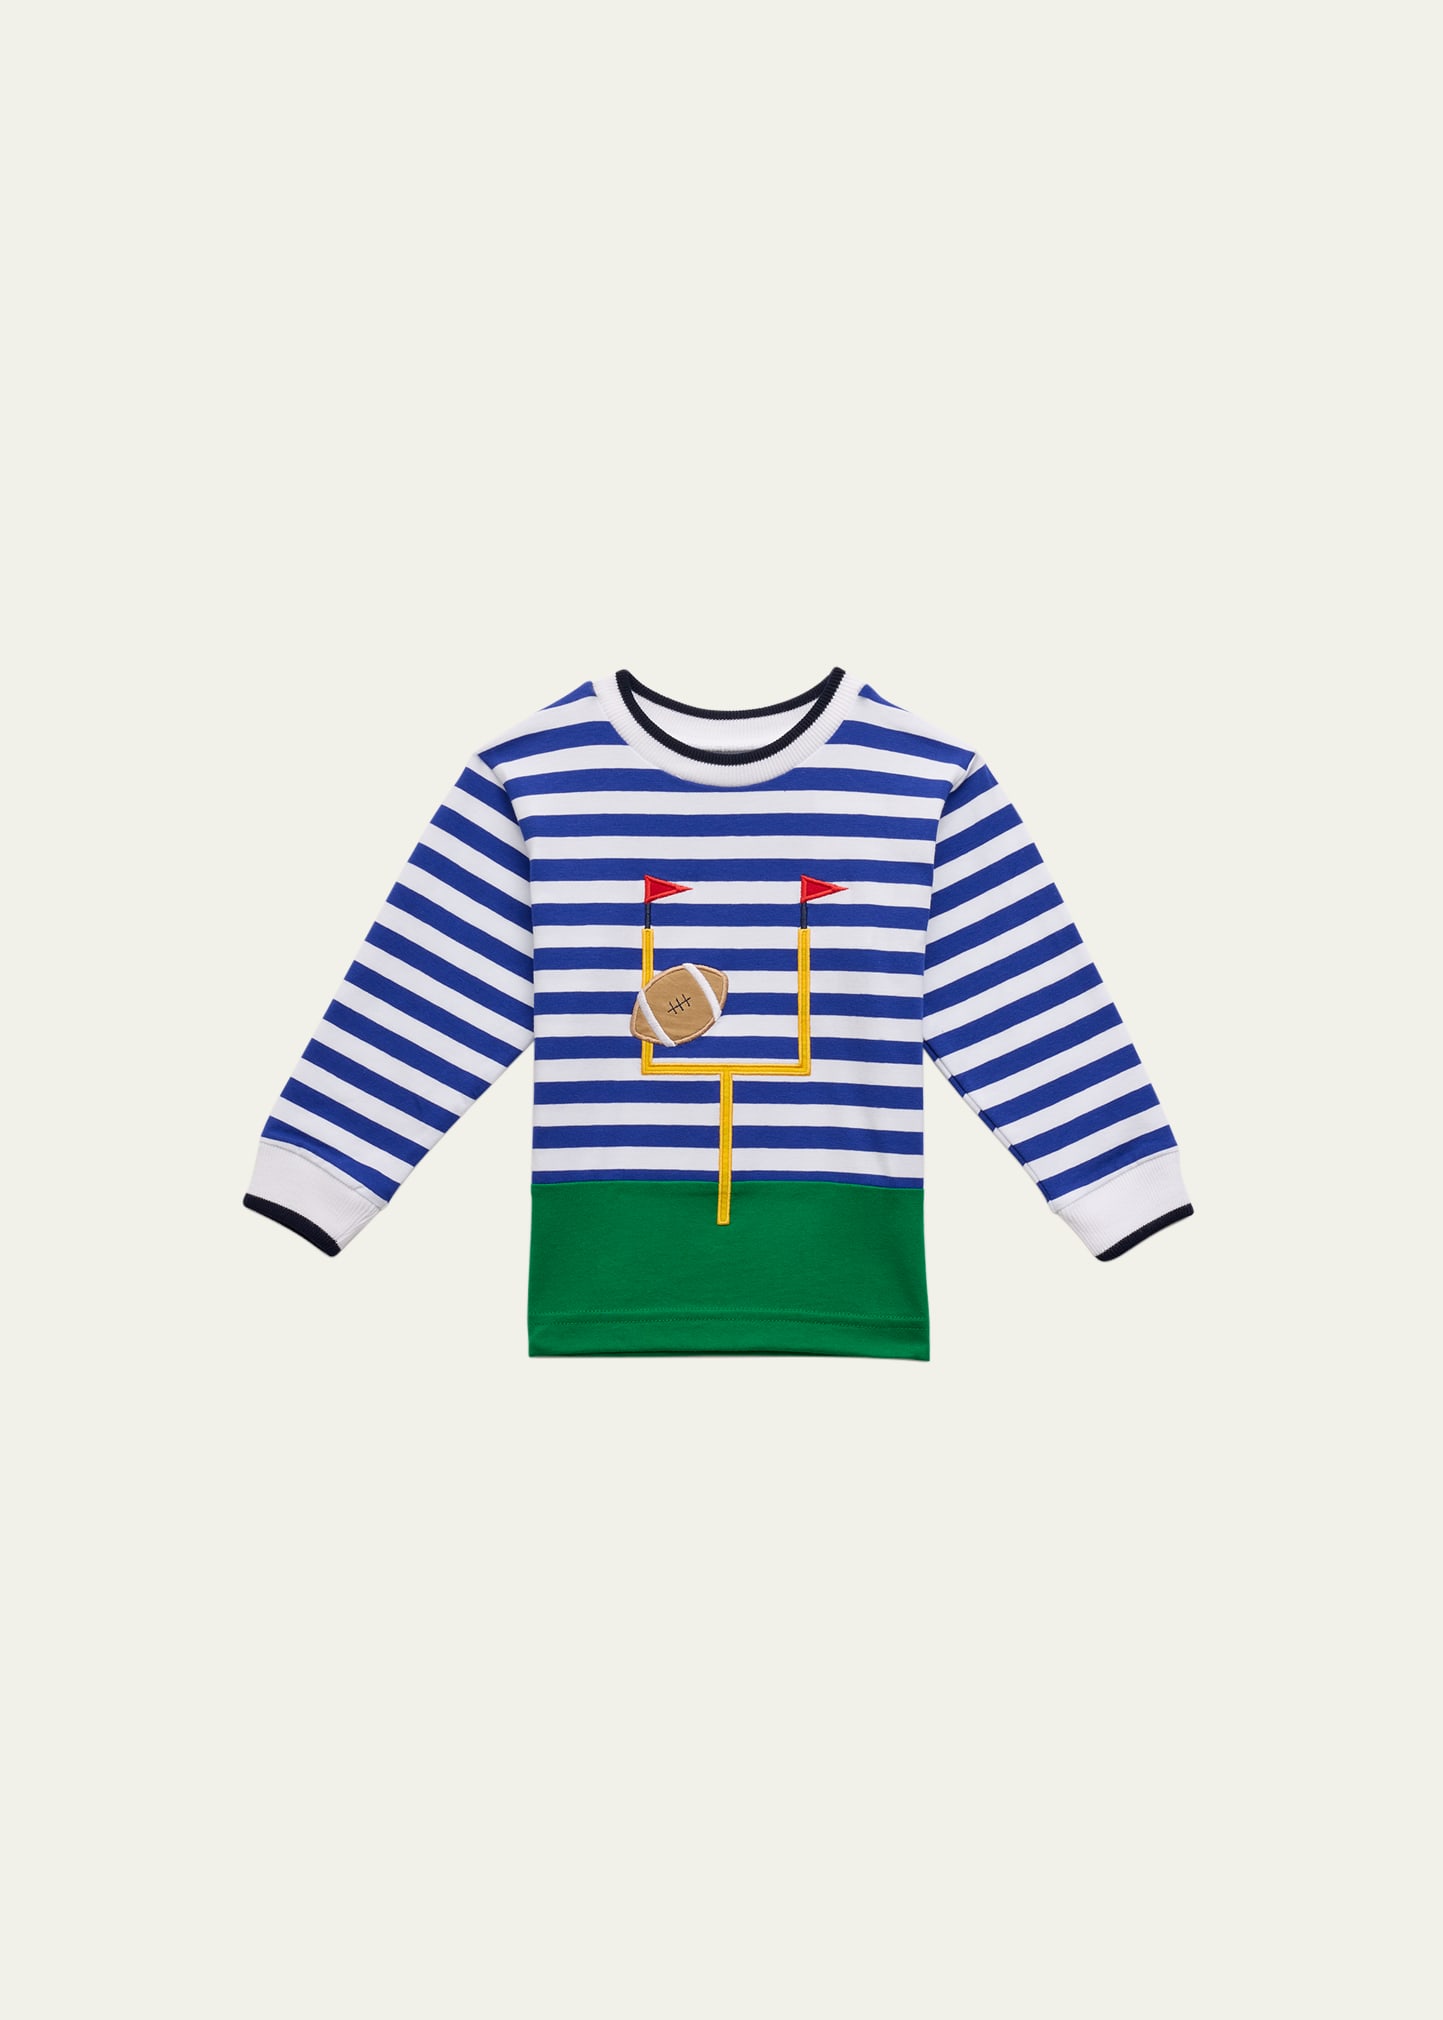 Boy's Striped Knit Embroidered Goalpost Shirt, Size 2-4